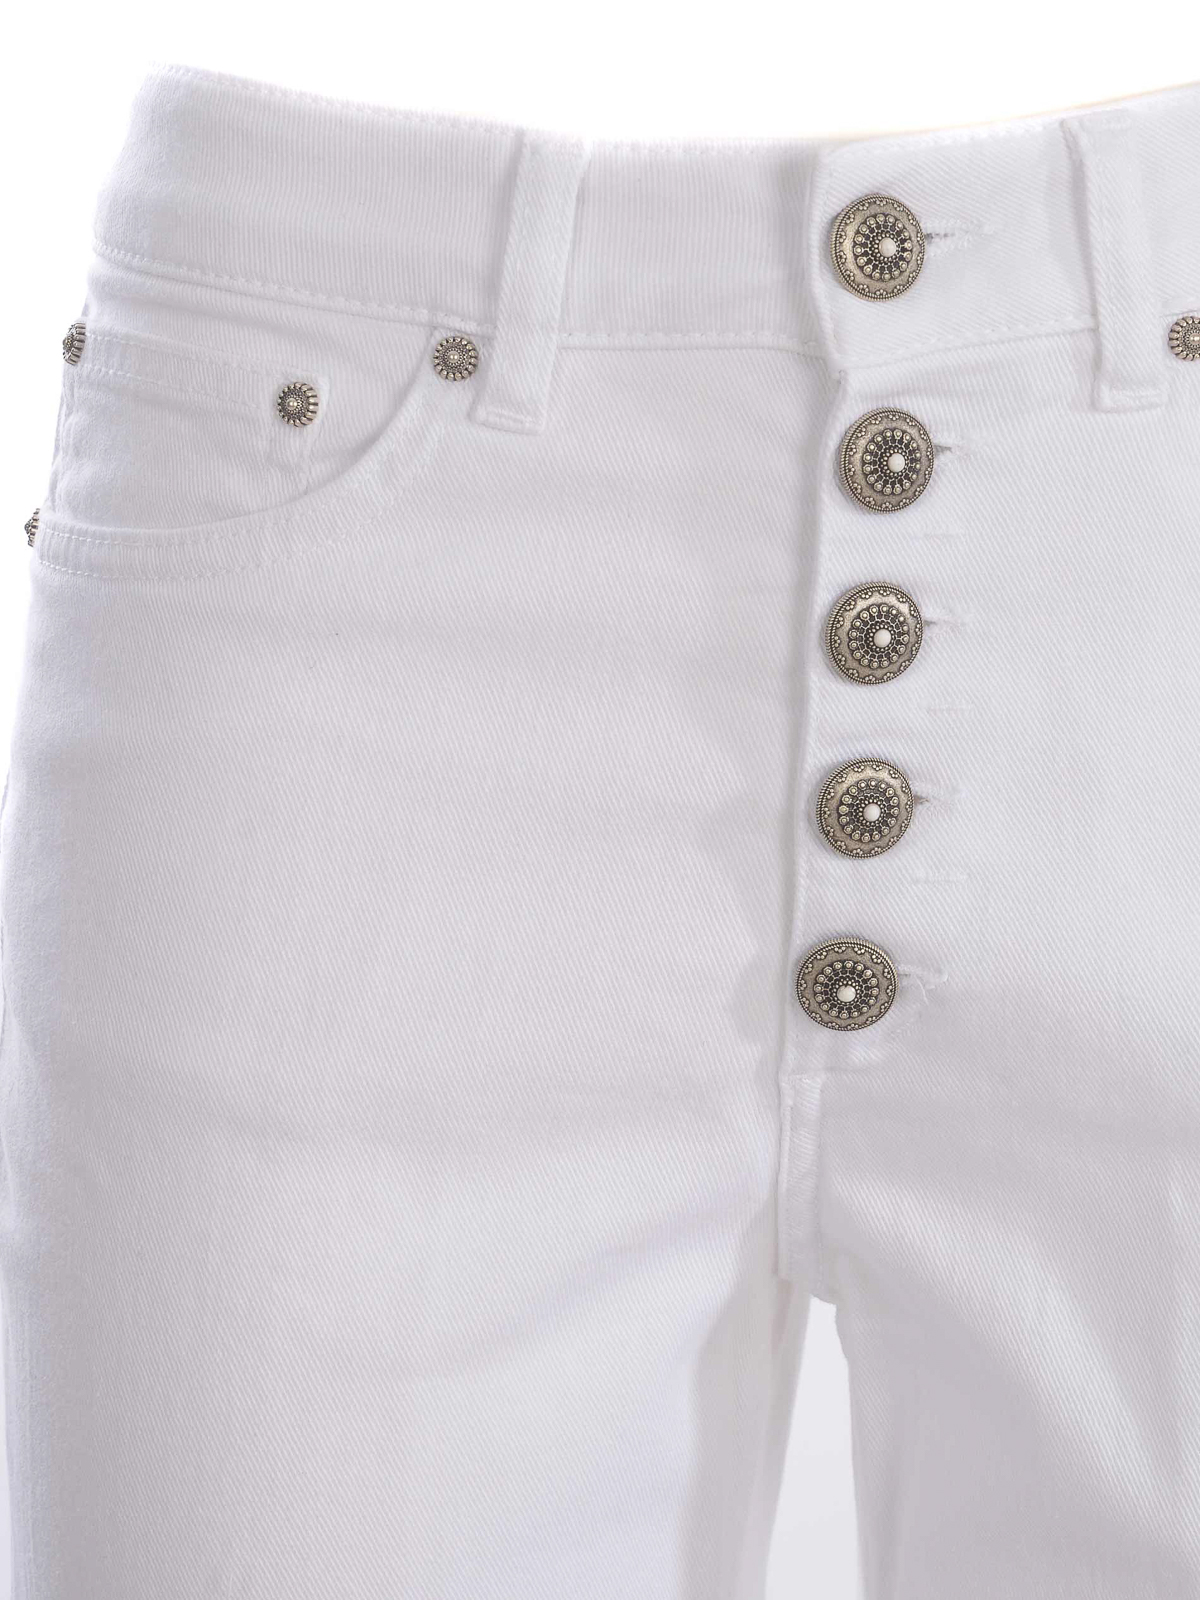 Shop Dondup Jeans   In Stretch Denim In White